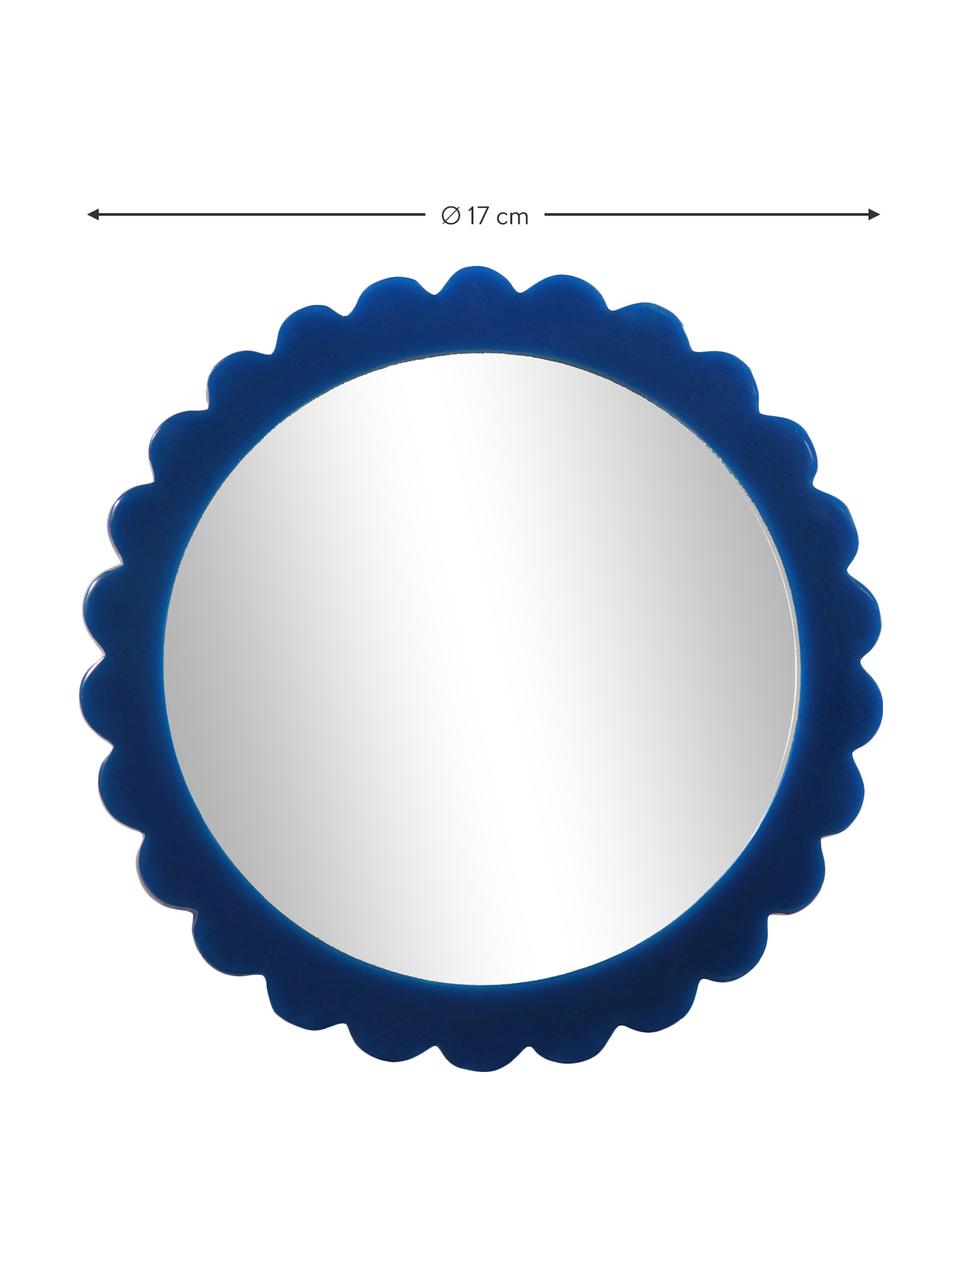 Make-up spiegel Bloom met blauw kunststof frame, Lijst: polyresin, Blauw, Ø 17 cm x D 2 cm